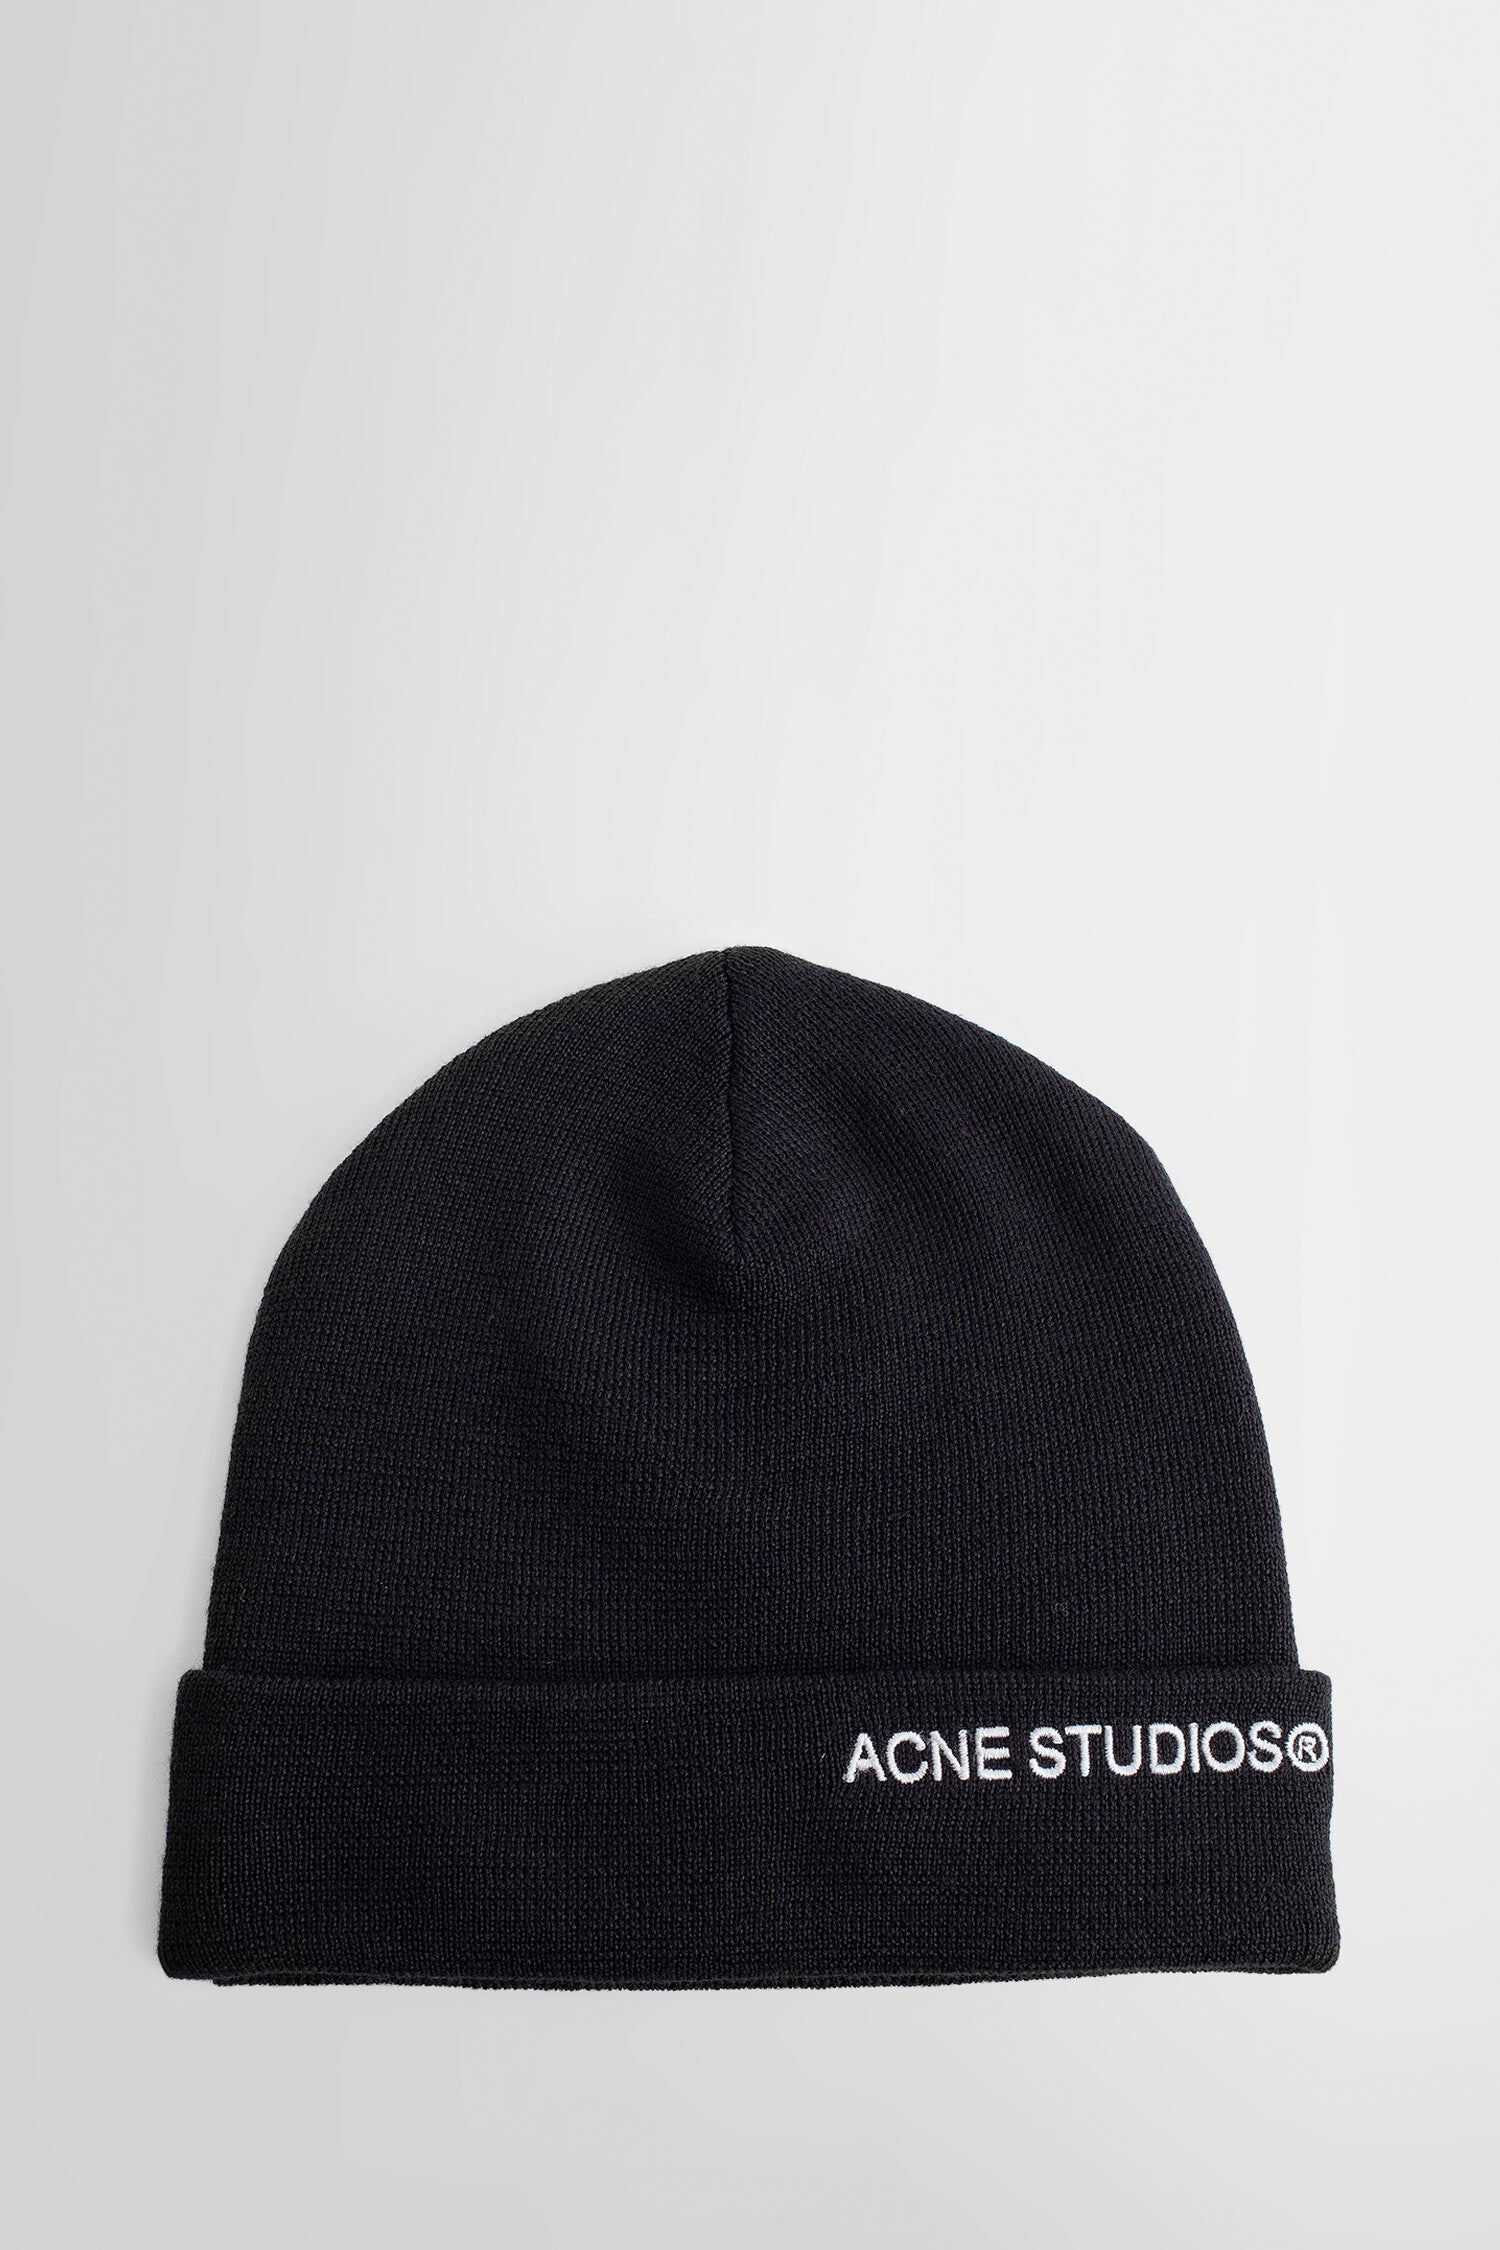 ACNE STUDIOS MAN BLACK HATS